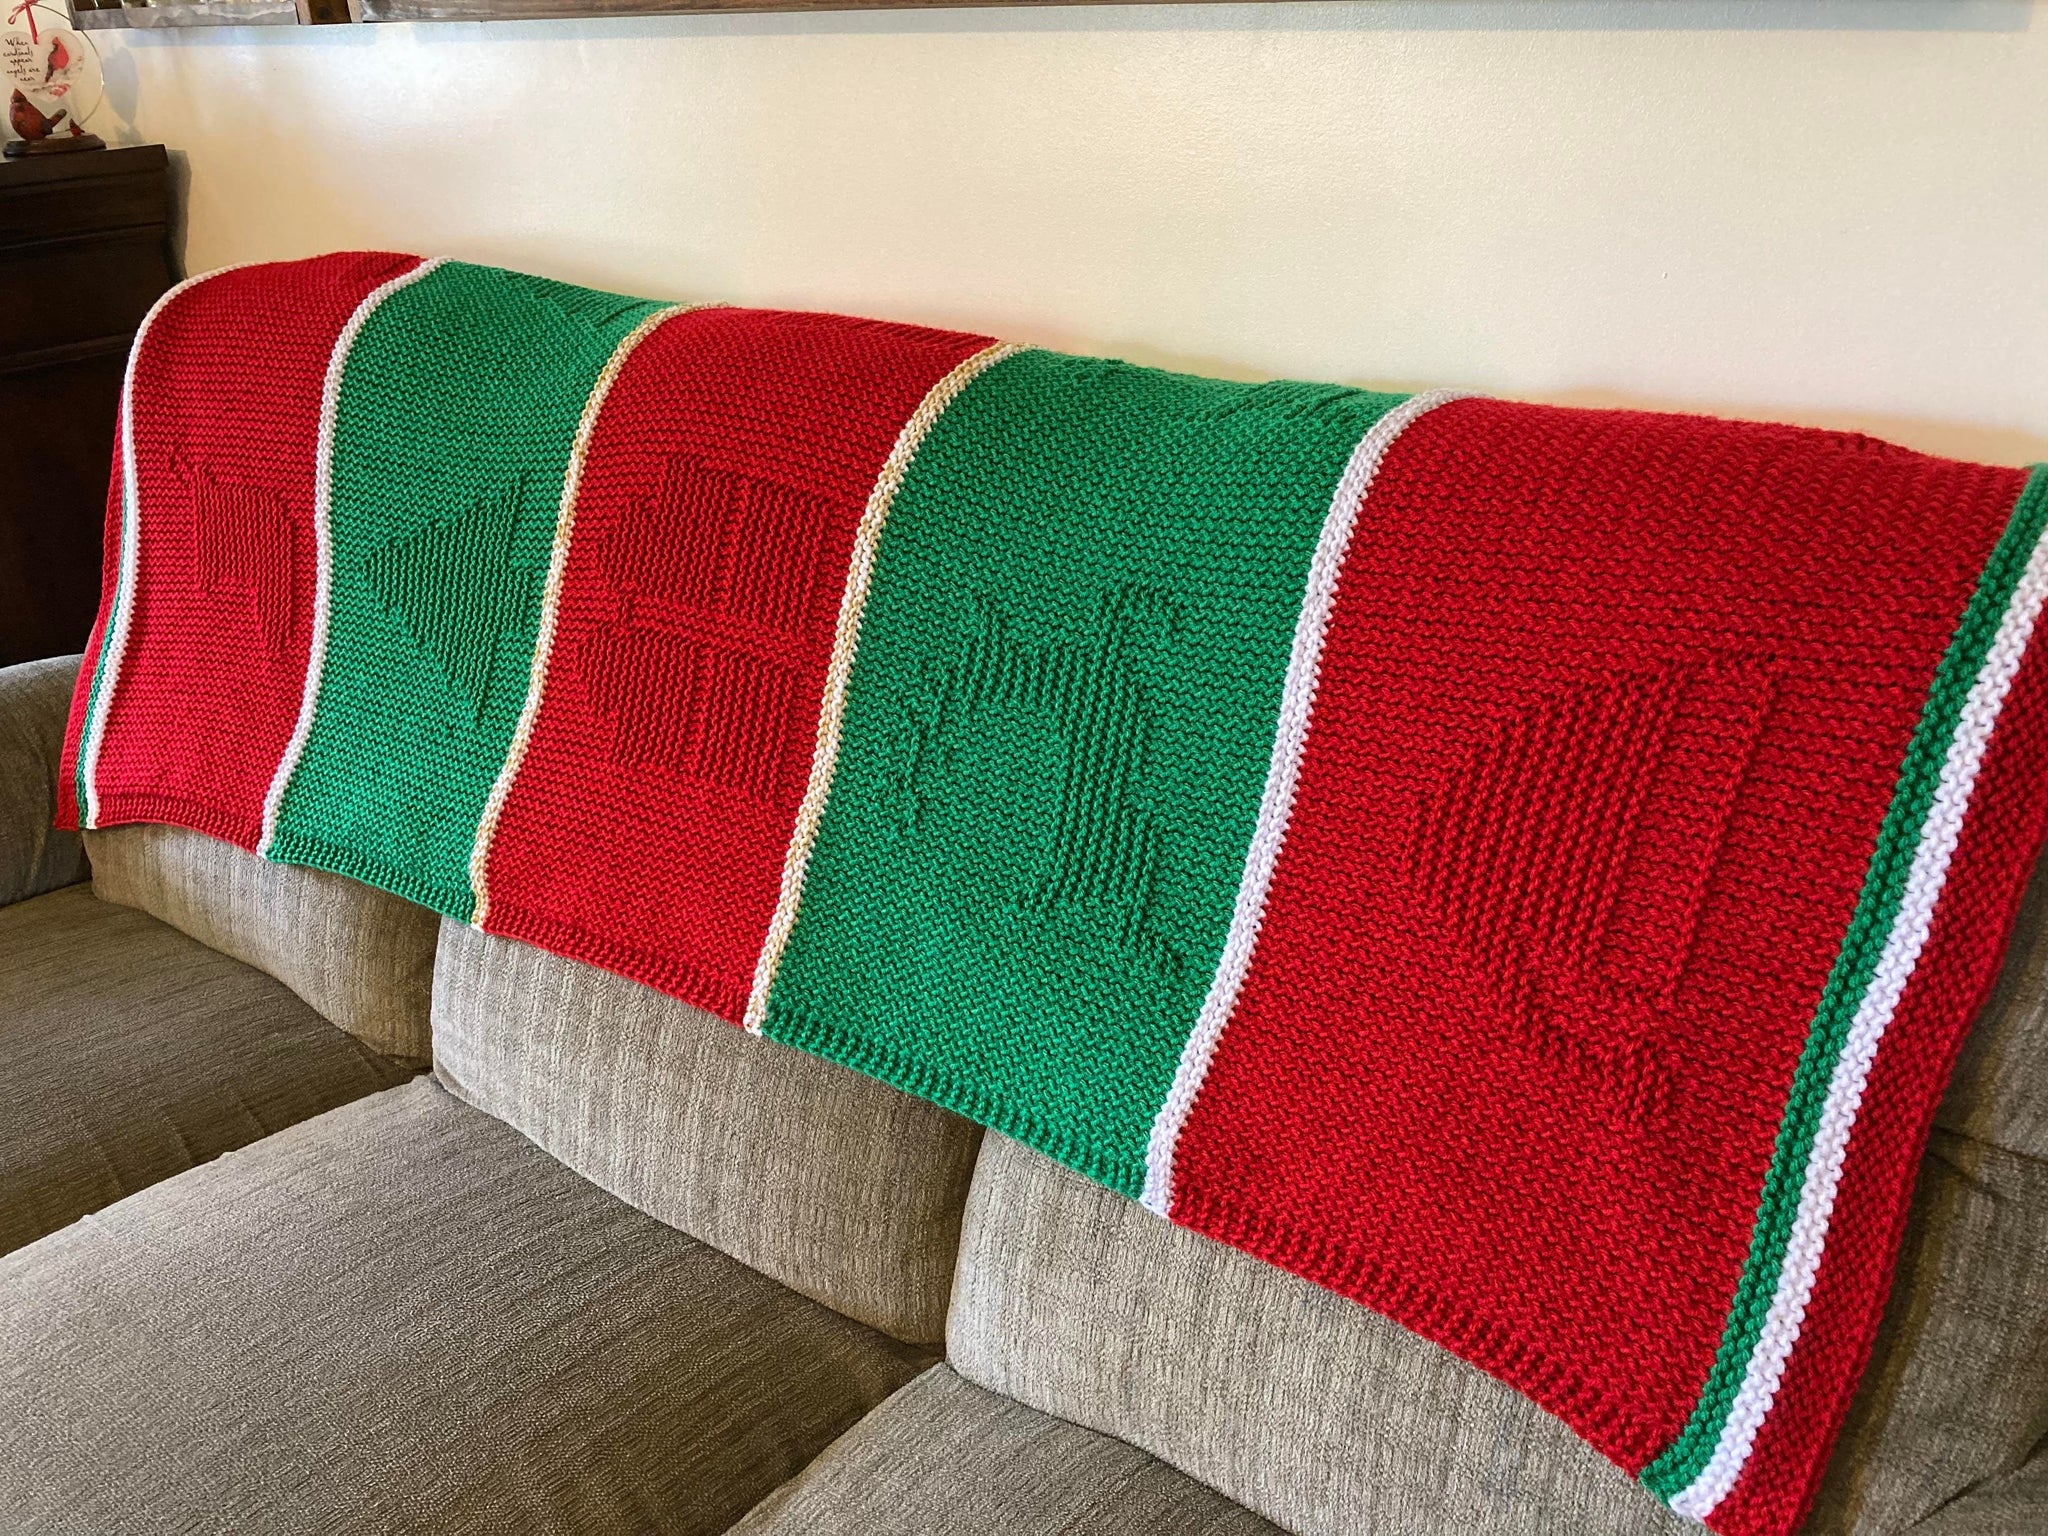 Finished our afghan loom knit blanket!!! #tiktokmademebuyit #afghanloo, knit blanket